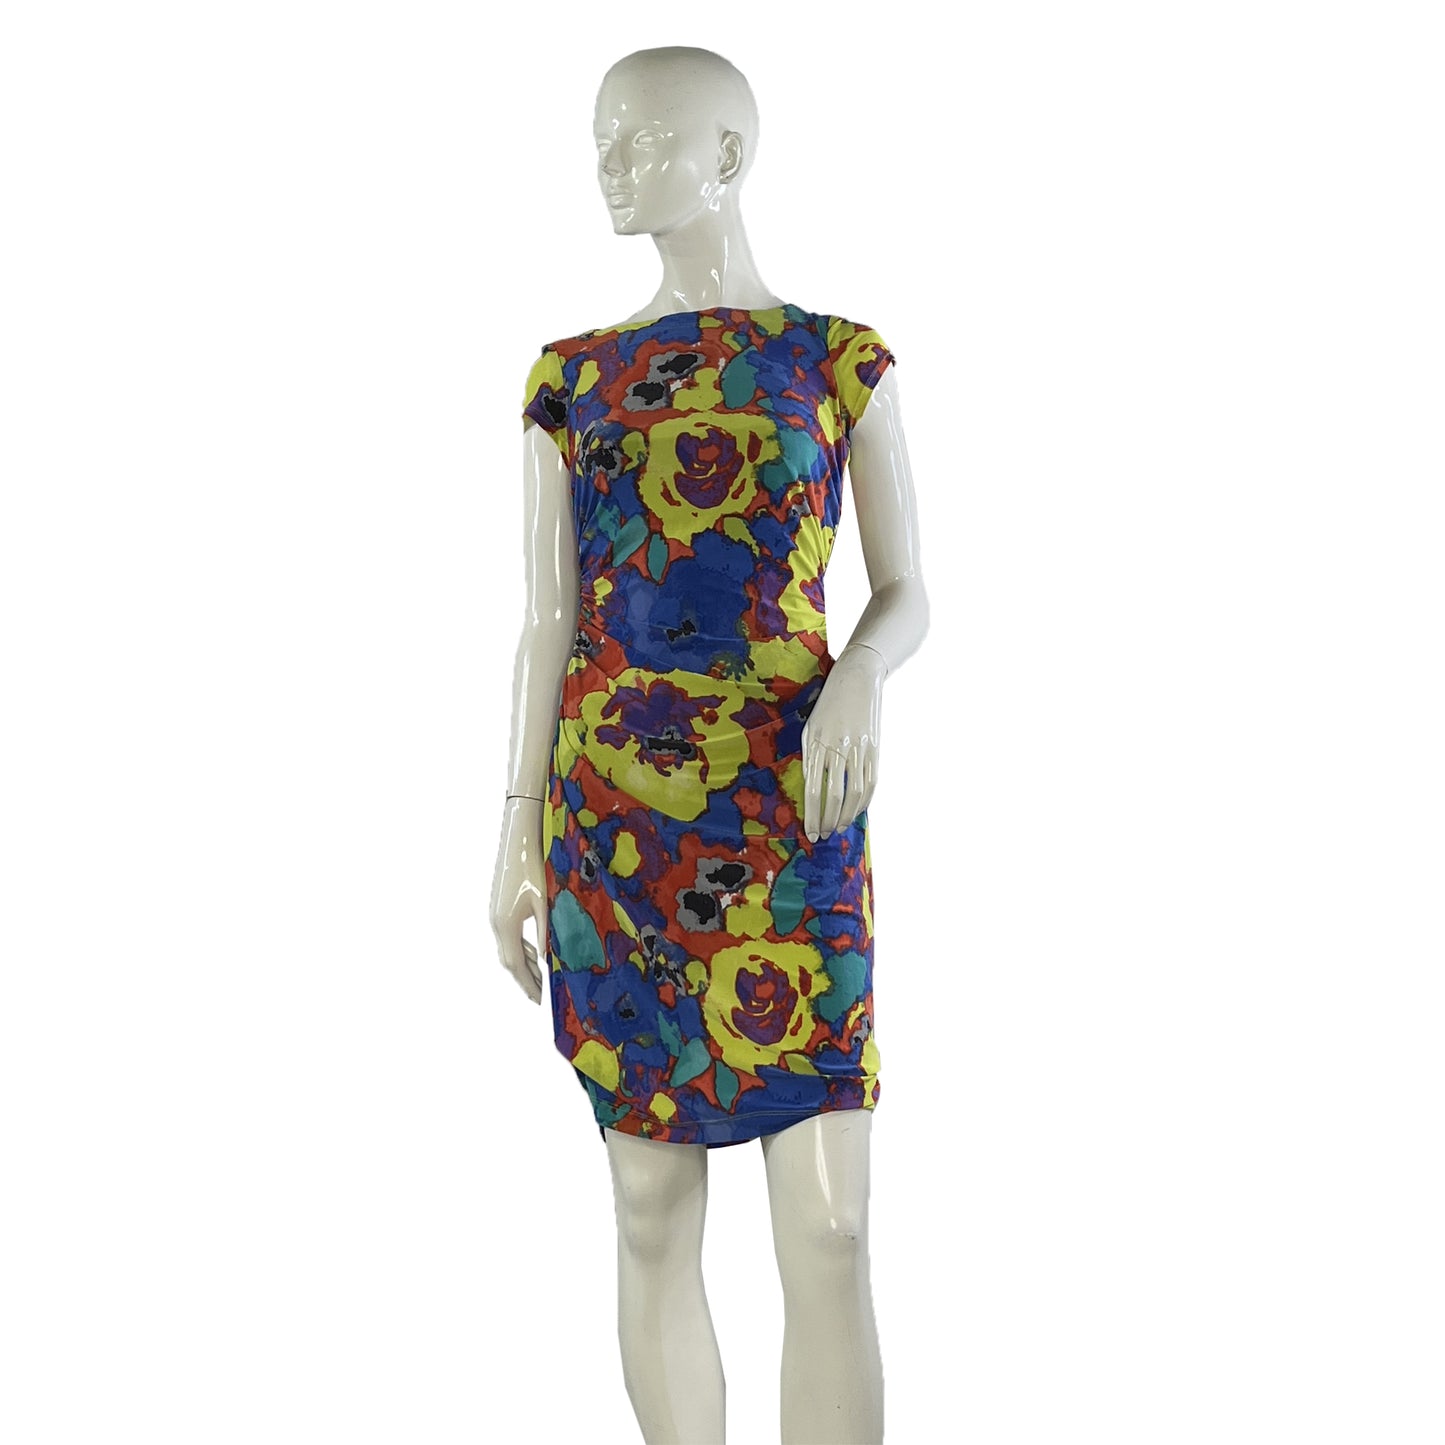 Jones NY Dress  Abstract Pattern Red, Blue, Yellow, Teal Sz 4 SKU 000414